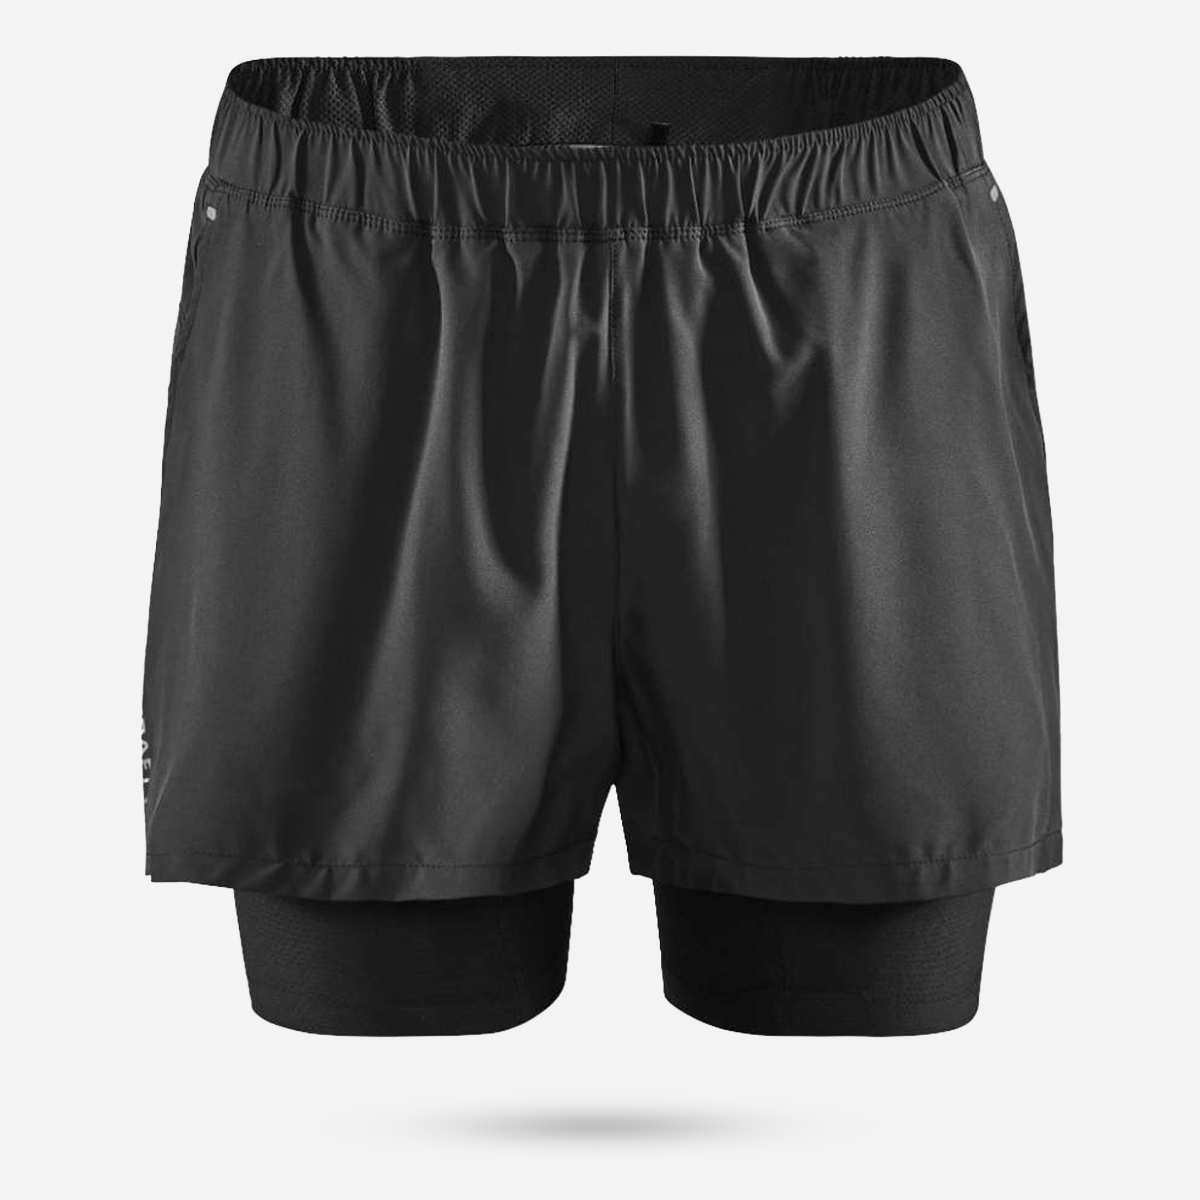 AN266424 Adv Essence 2-in-1 Stretch Shorts